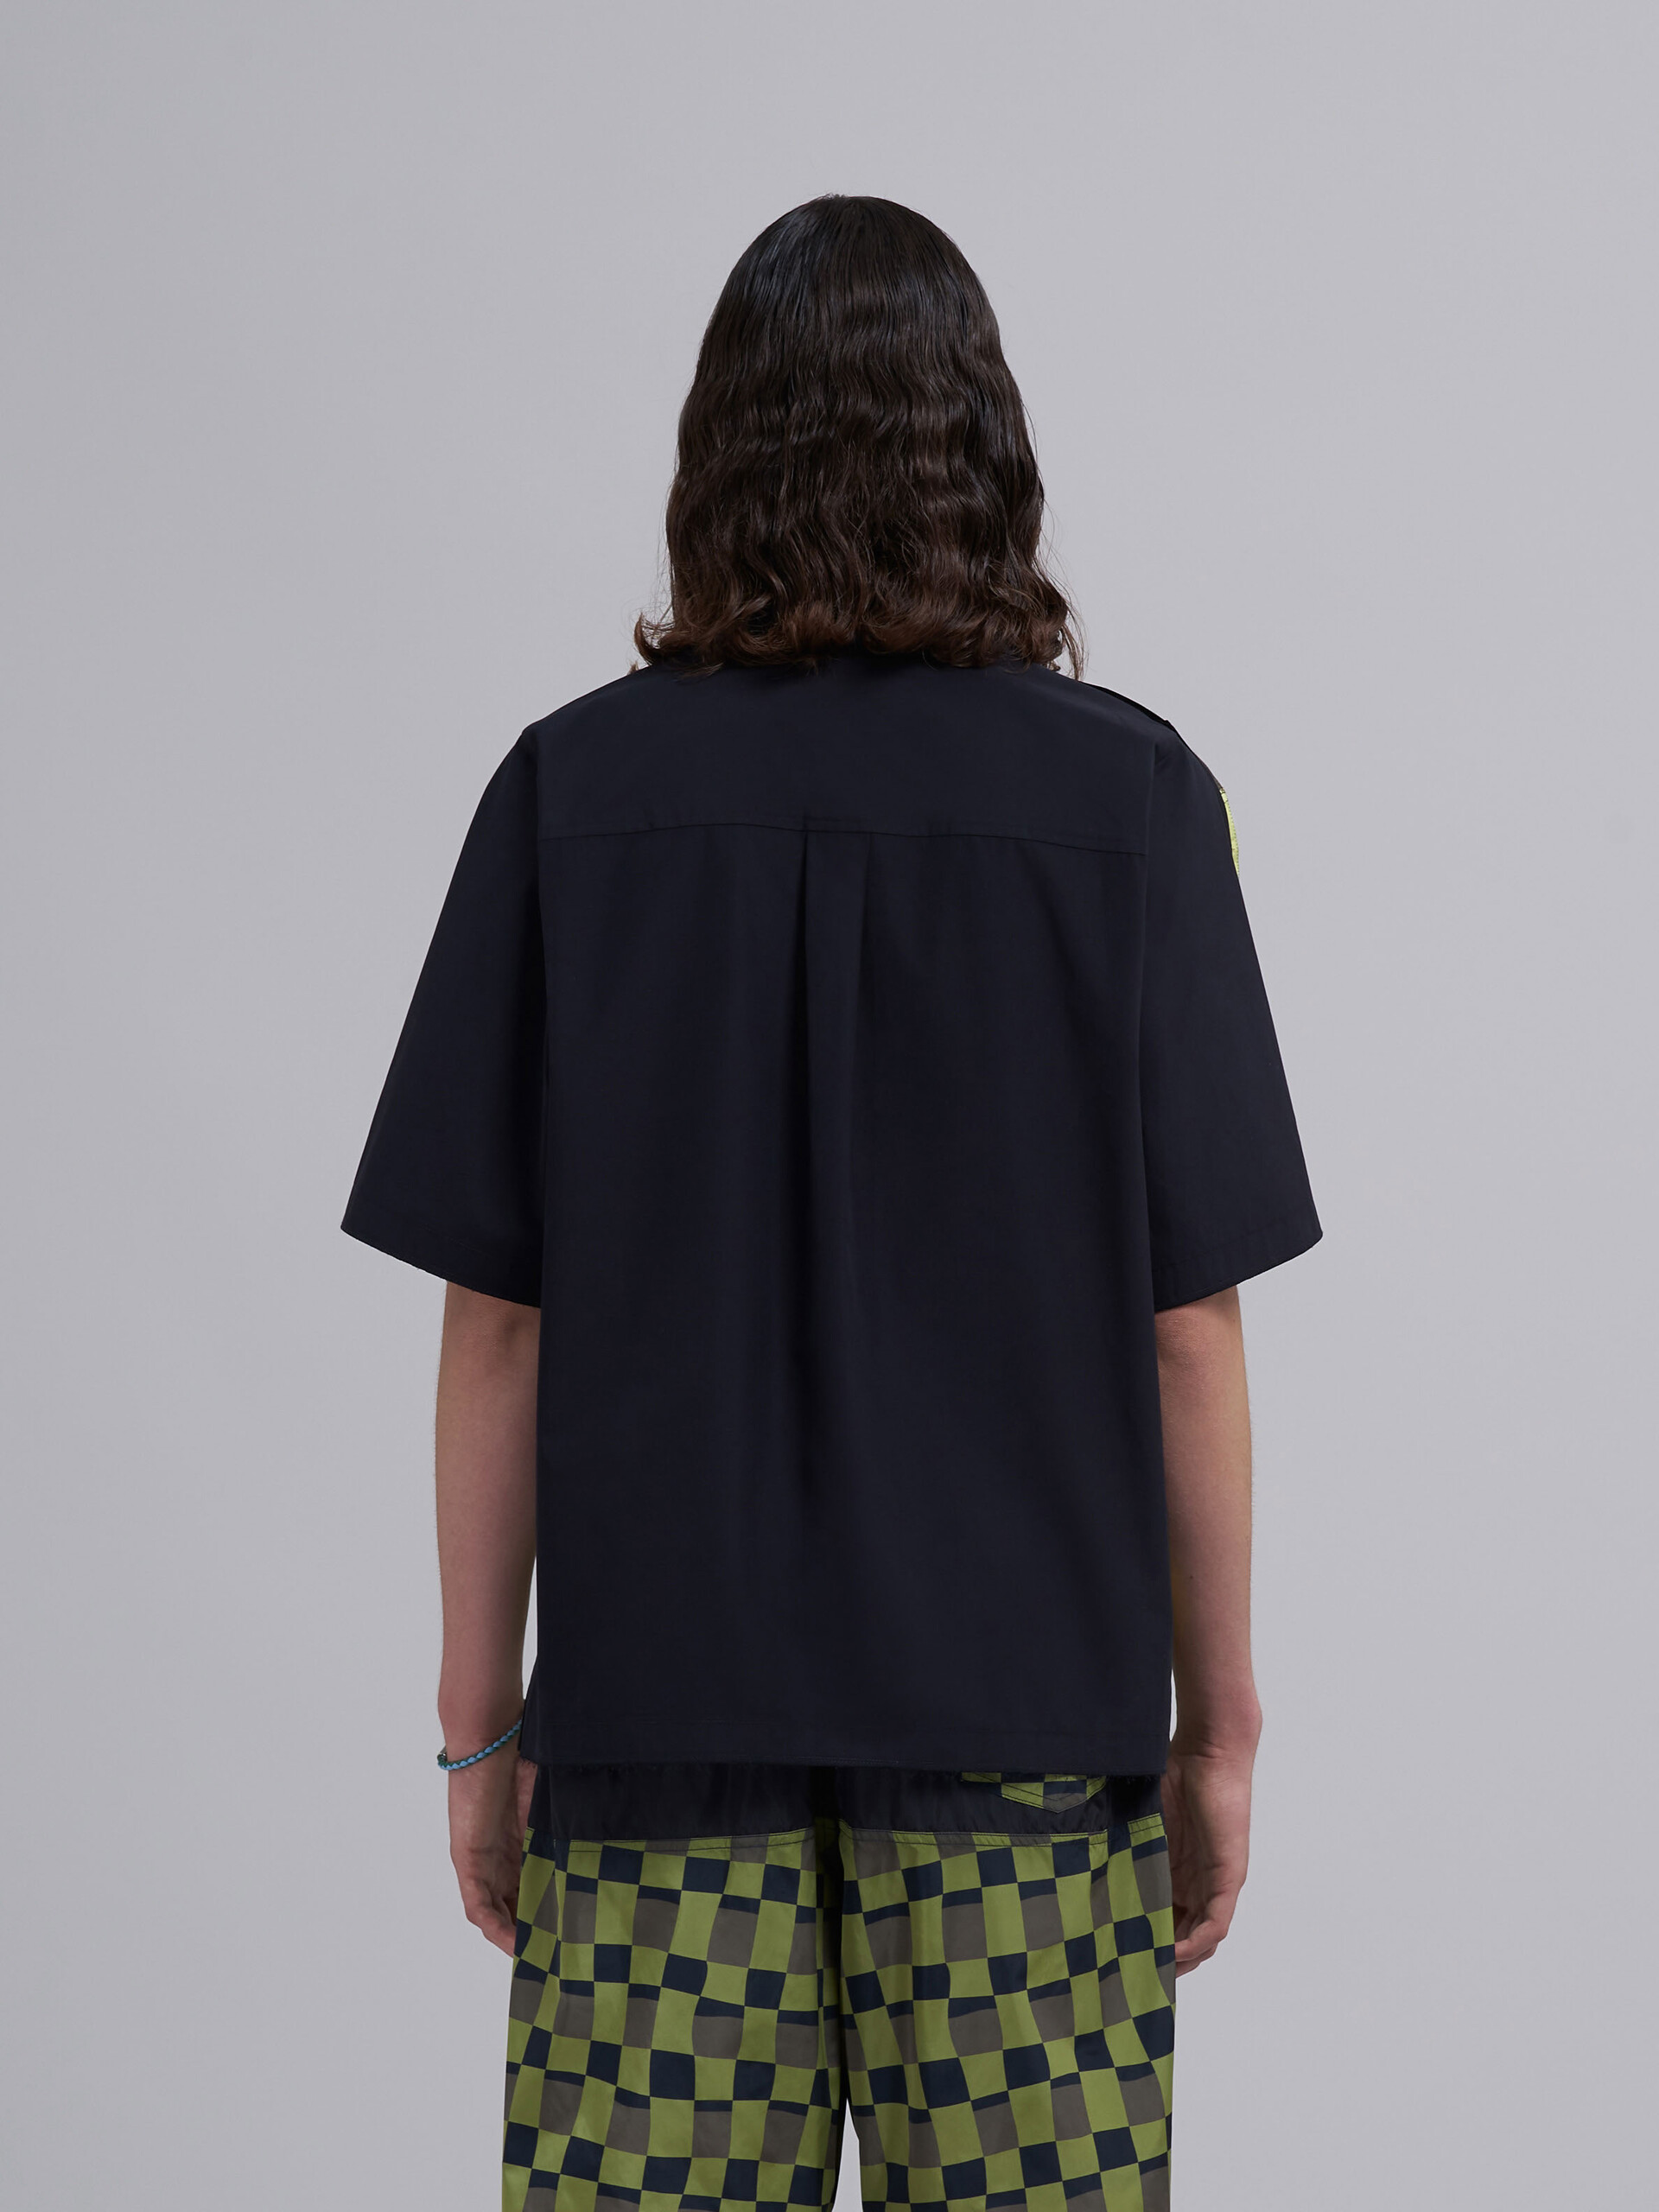 50s Camoプリント 混合素材製ボーリングシャツ - シャツ - Image 3